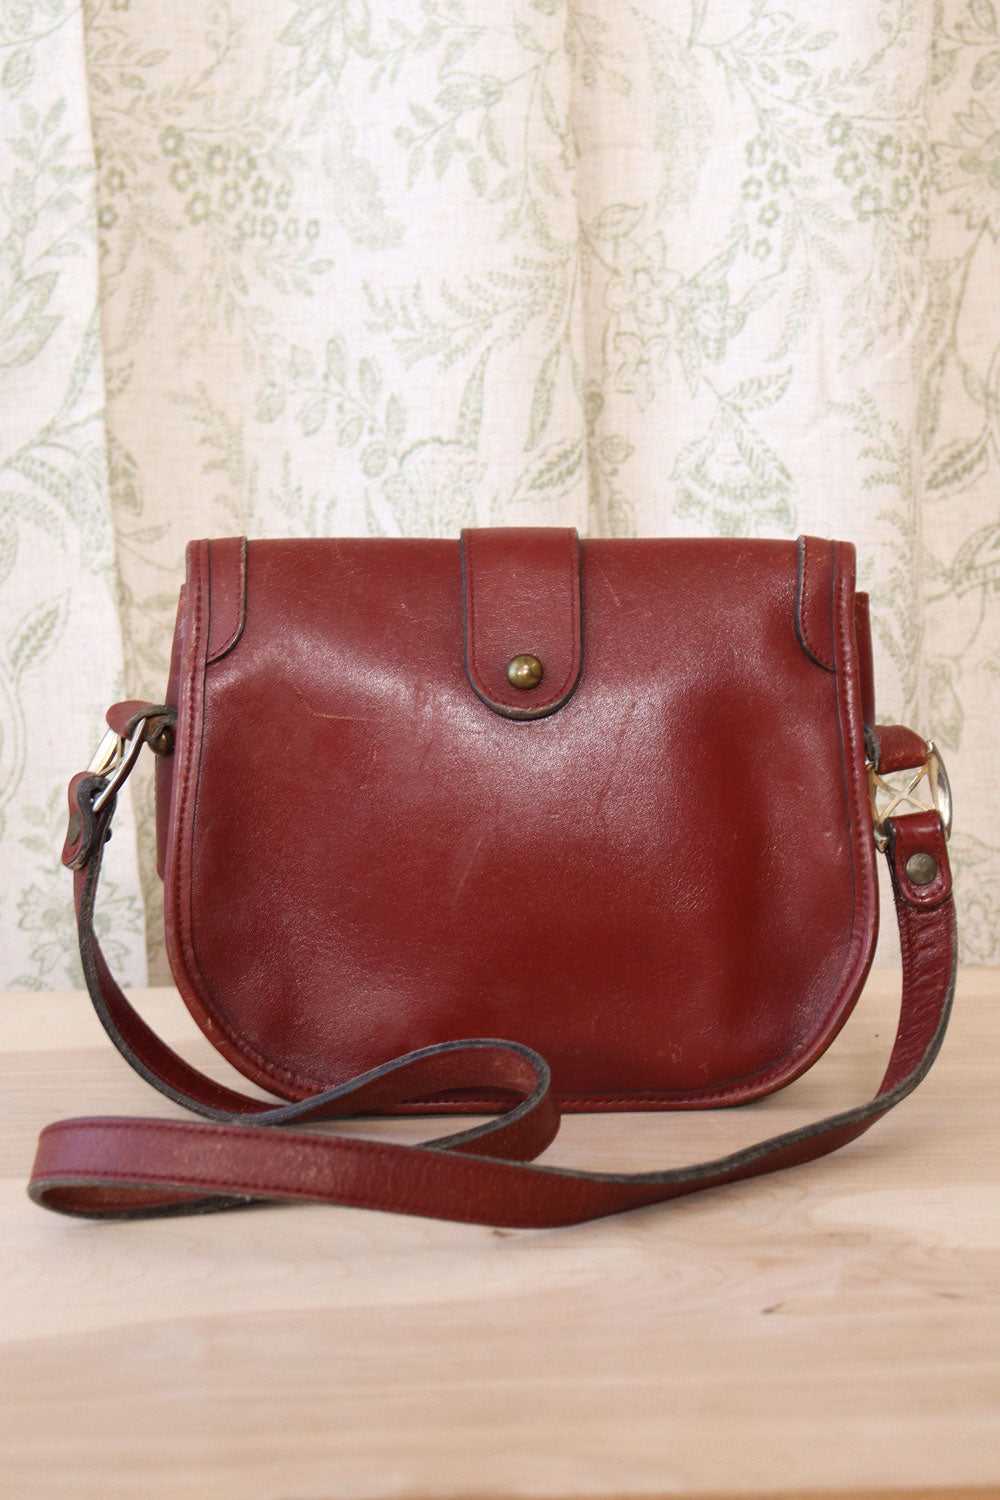 Aigner Aubergine Leather Bag - image 3